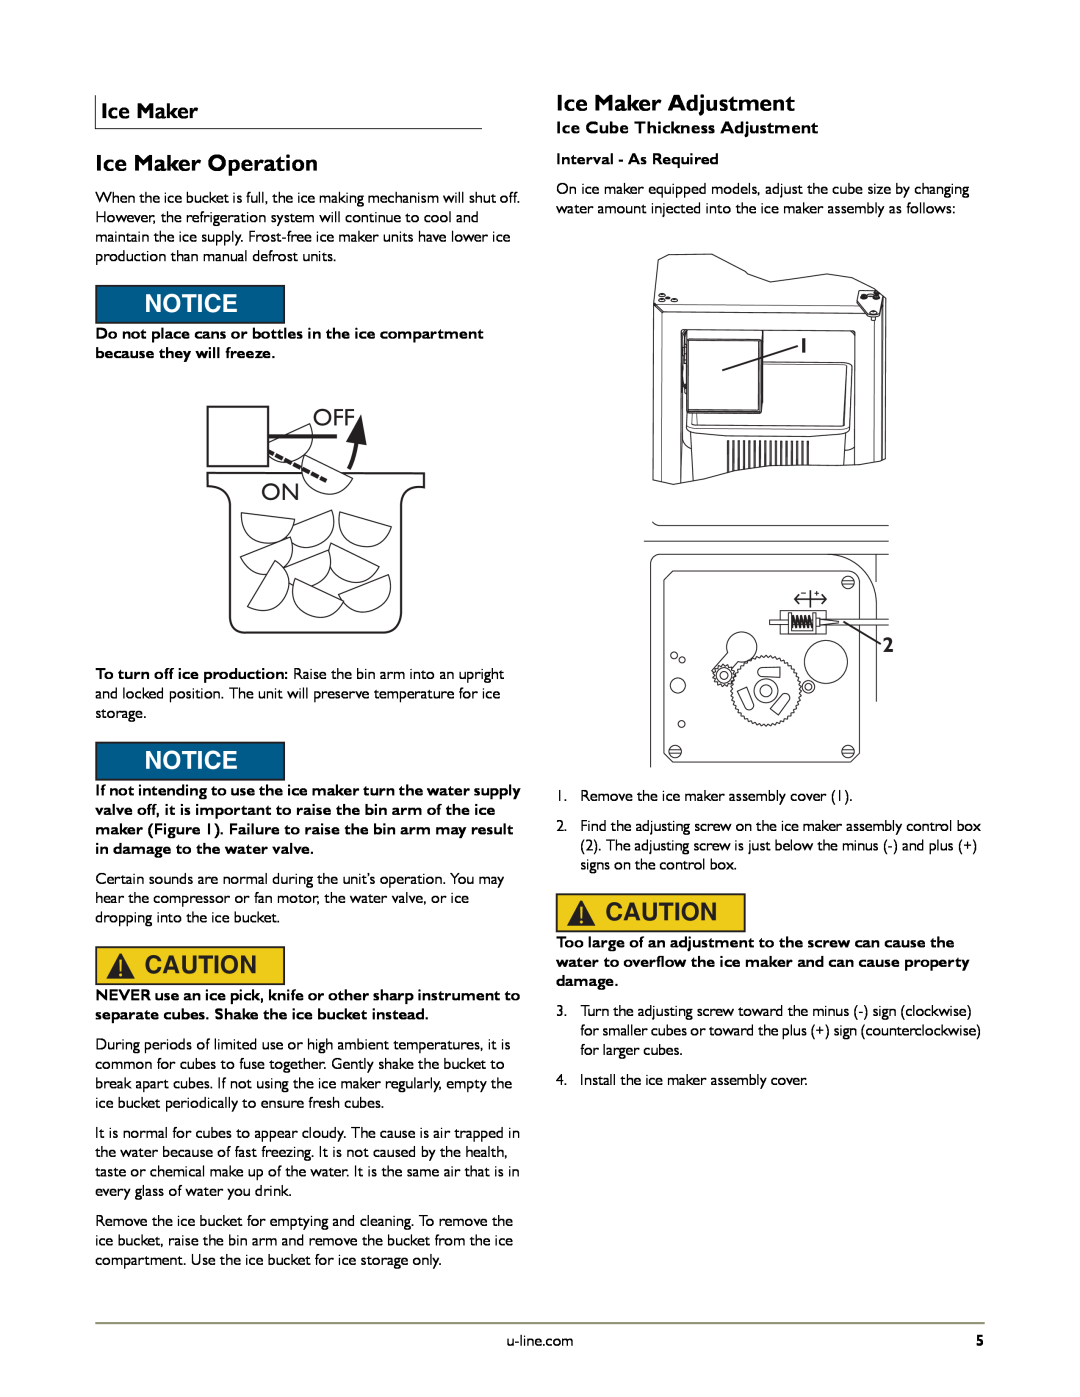 U-Line U-CO298-00 manual Ice Maker Operation, Ice Maker Adjustment, Ice Cube Thickness Adjustment 